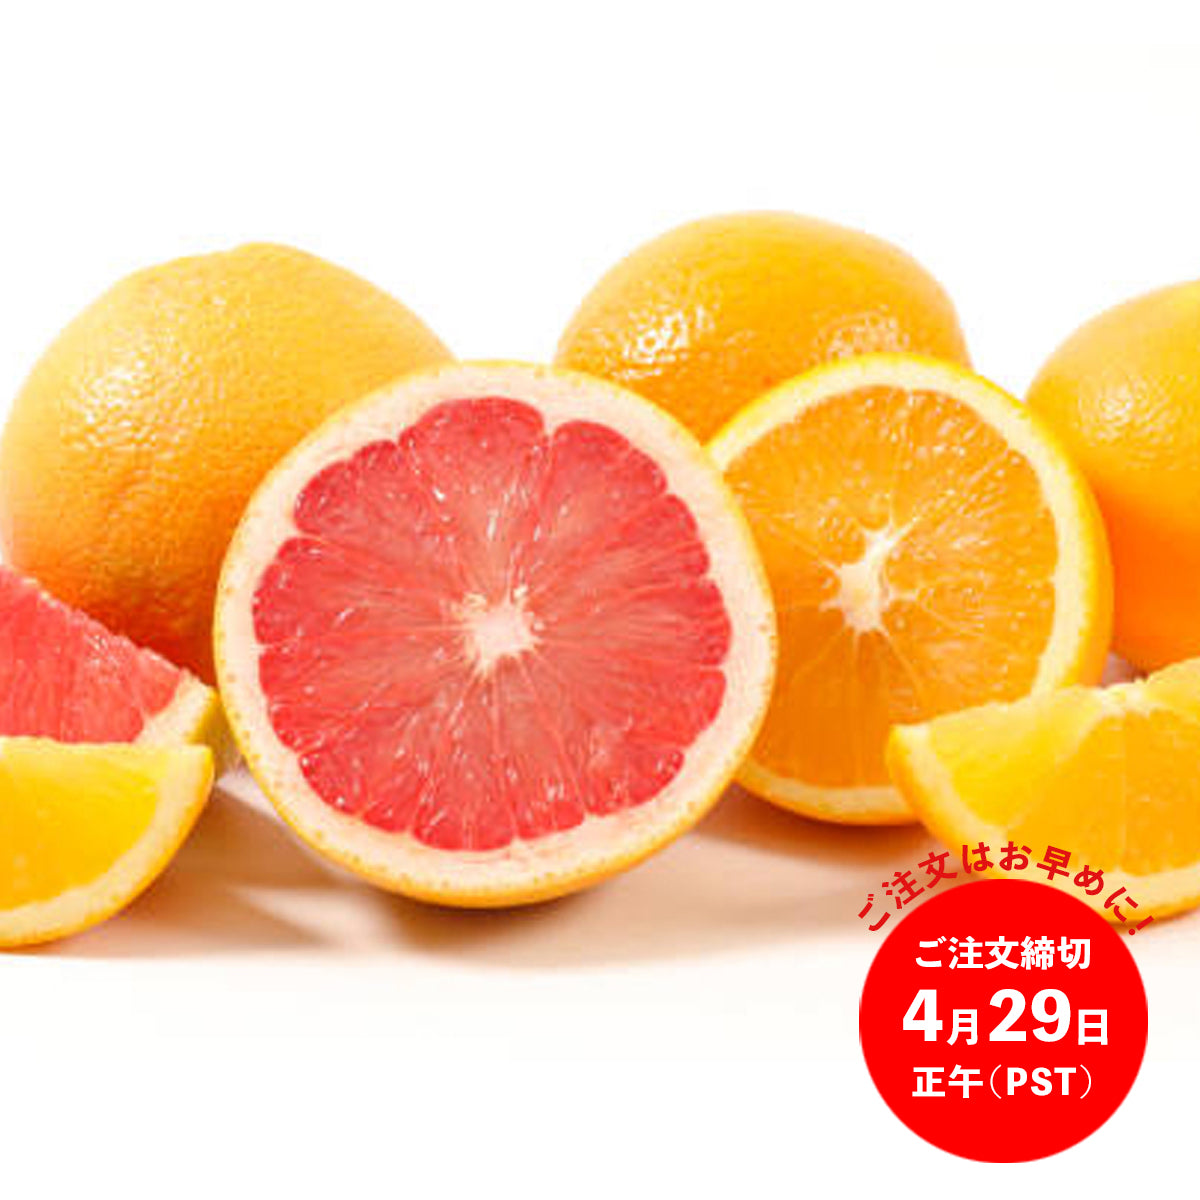 Premium Navel Orange (XL) & Ruby Grapefruit (XL) 【Seasonal】